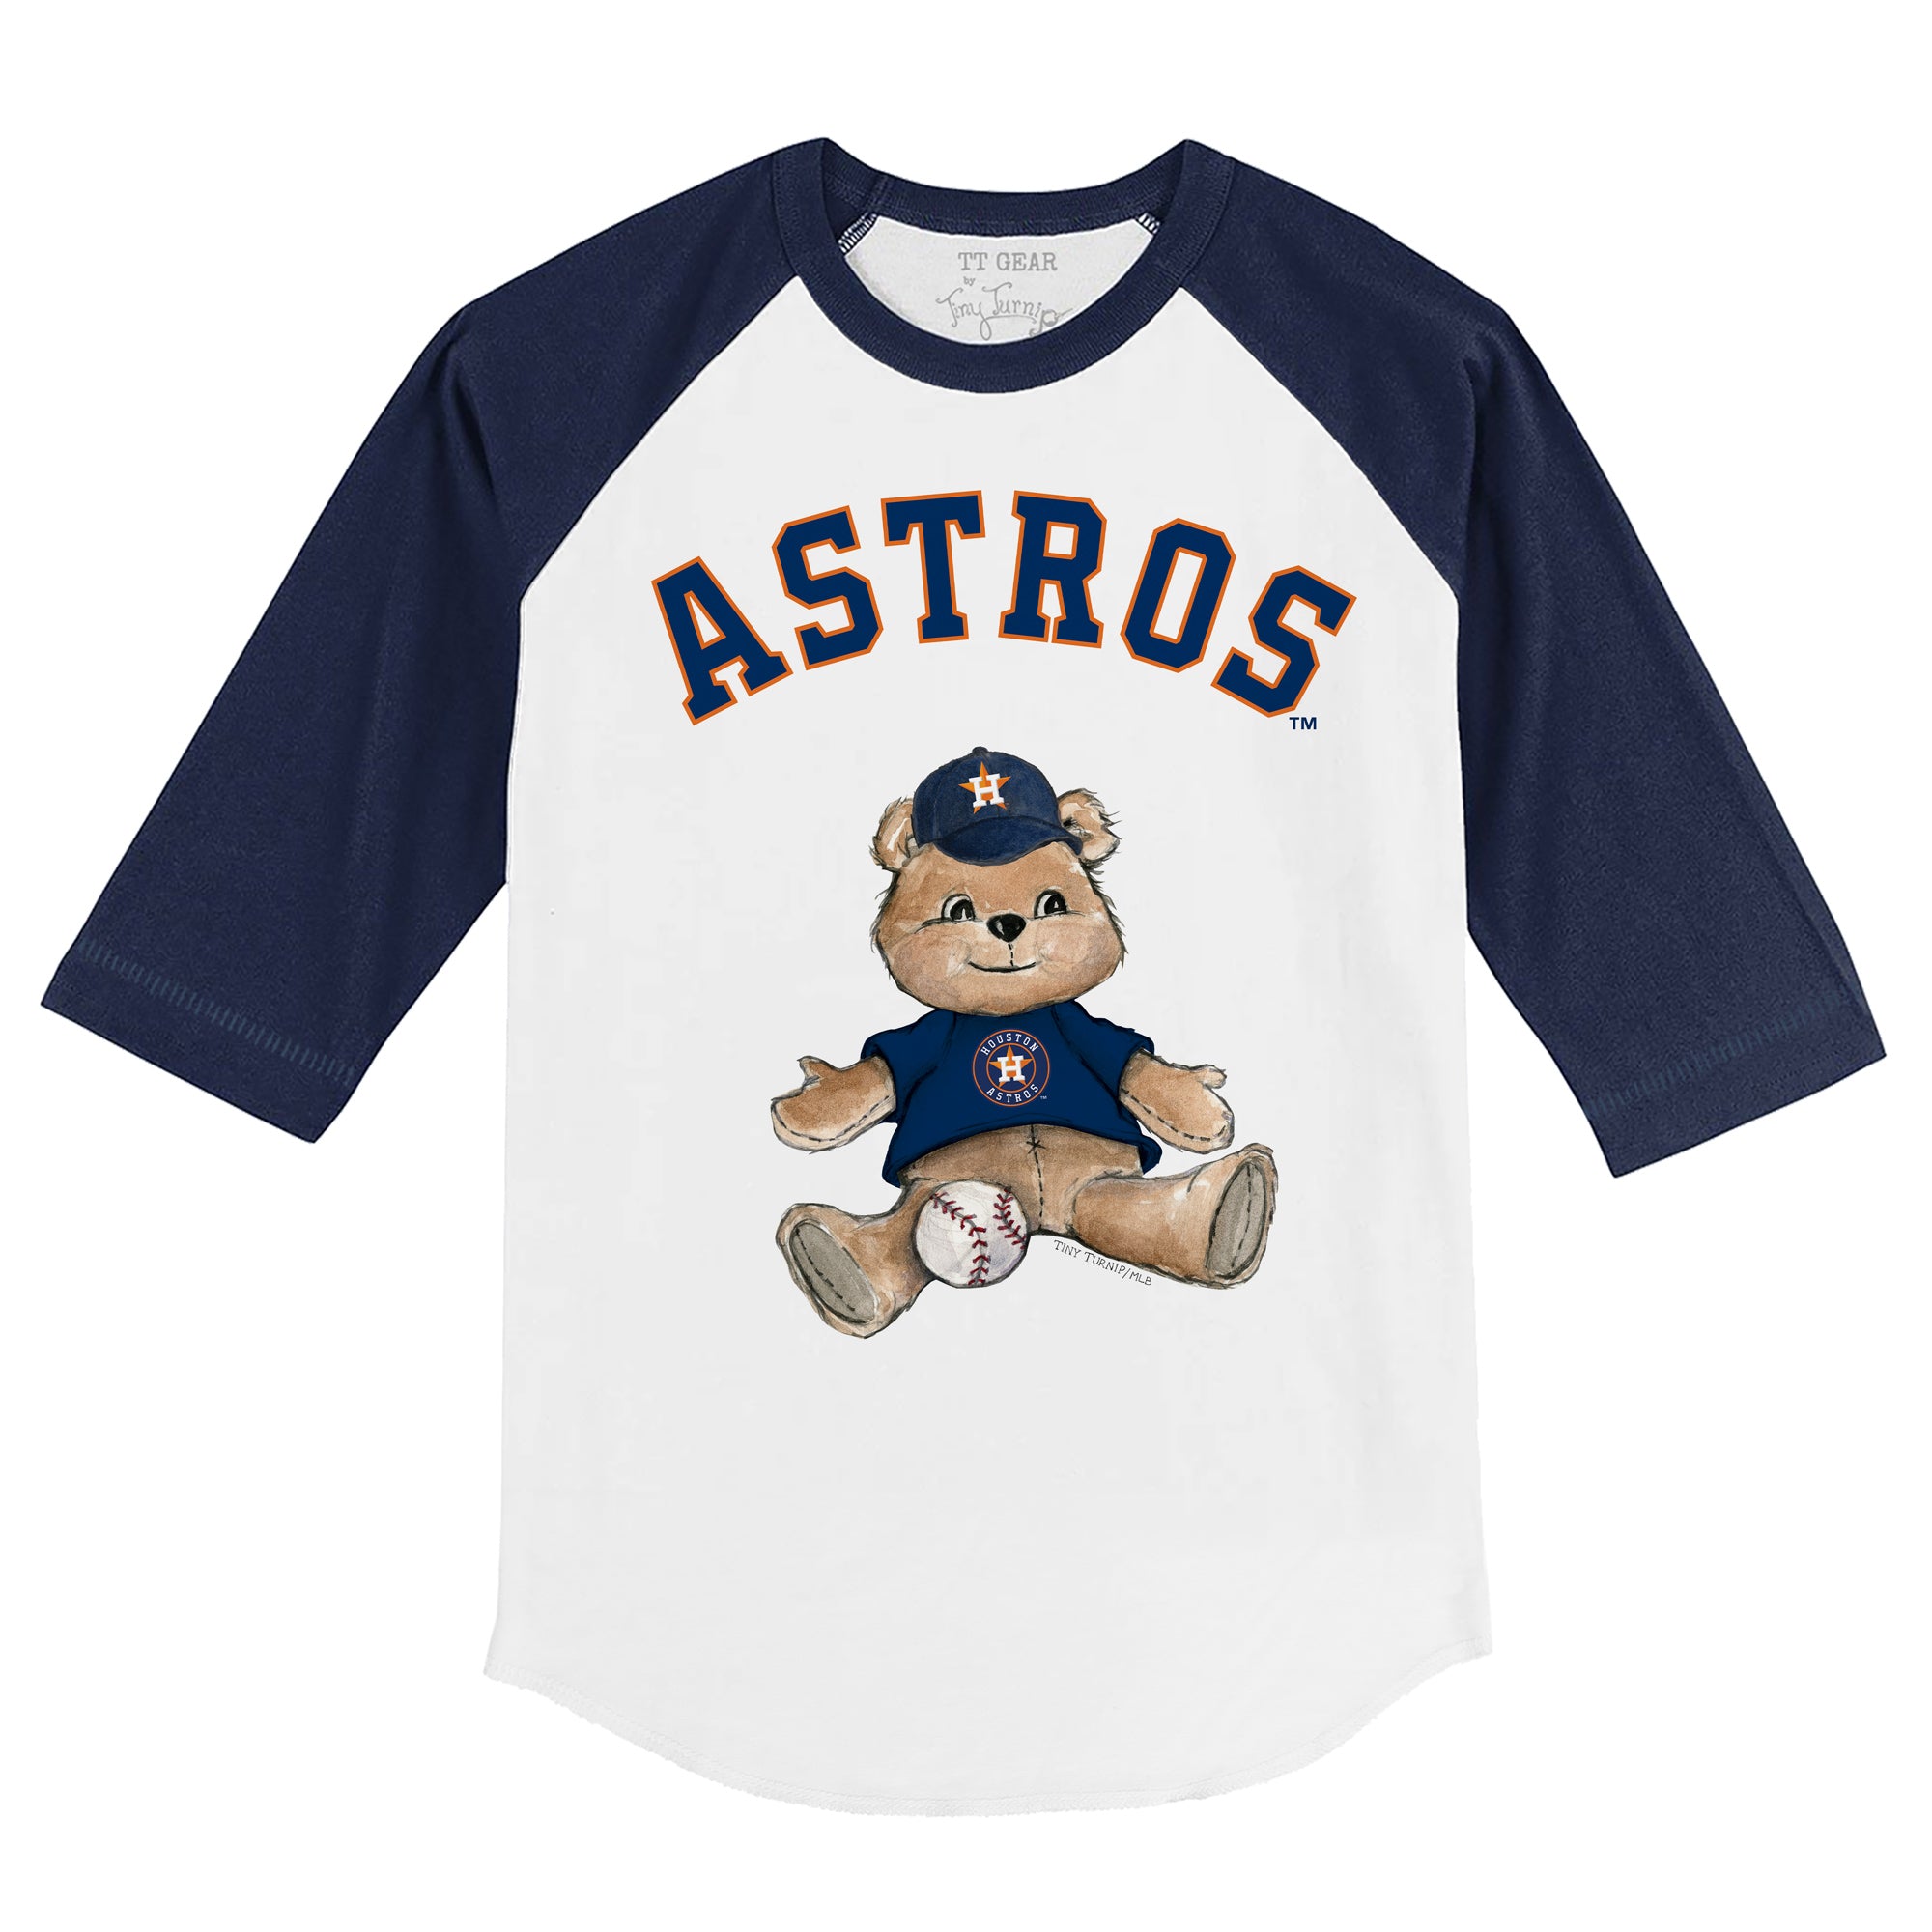 Houston Astros Space City Baseball Jersey Fan Made Black Size S - XL